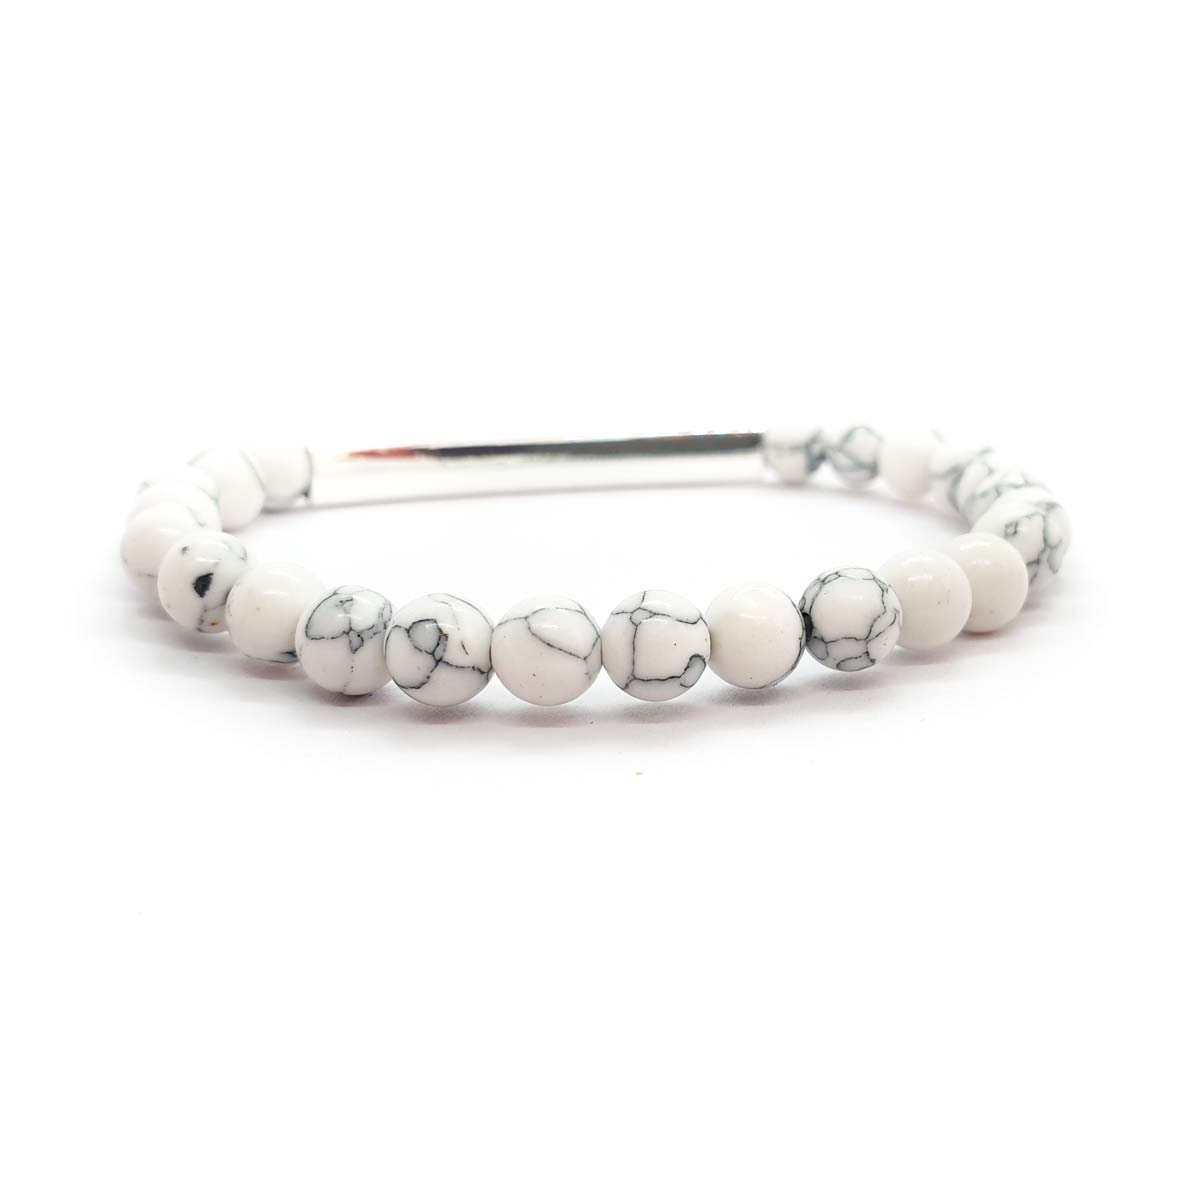 White Howlite Gemstone Bracelet – Hello Ātaahua